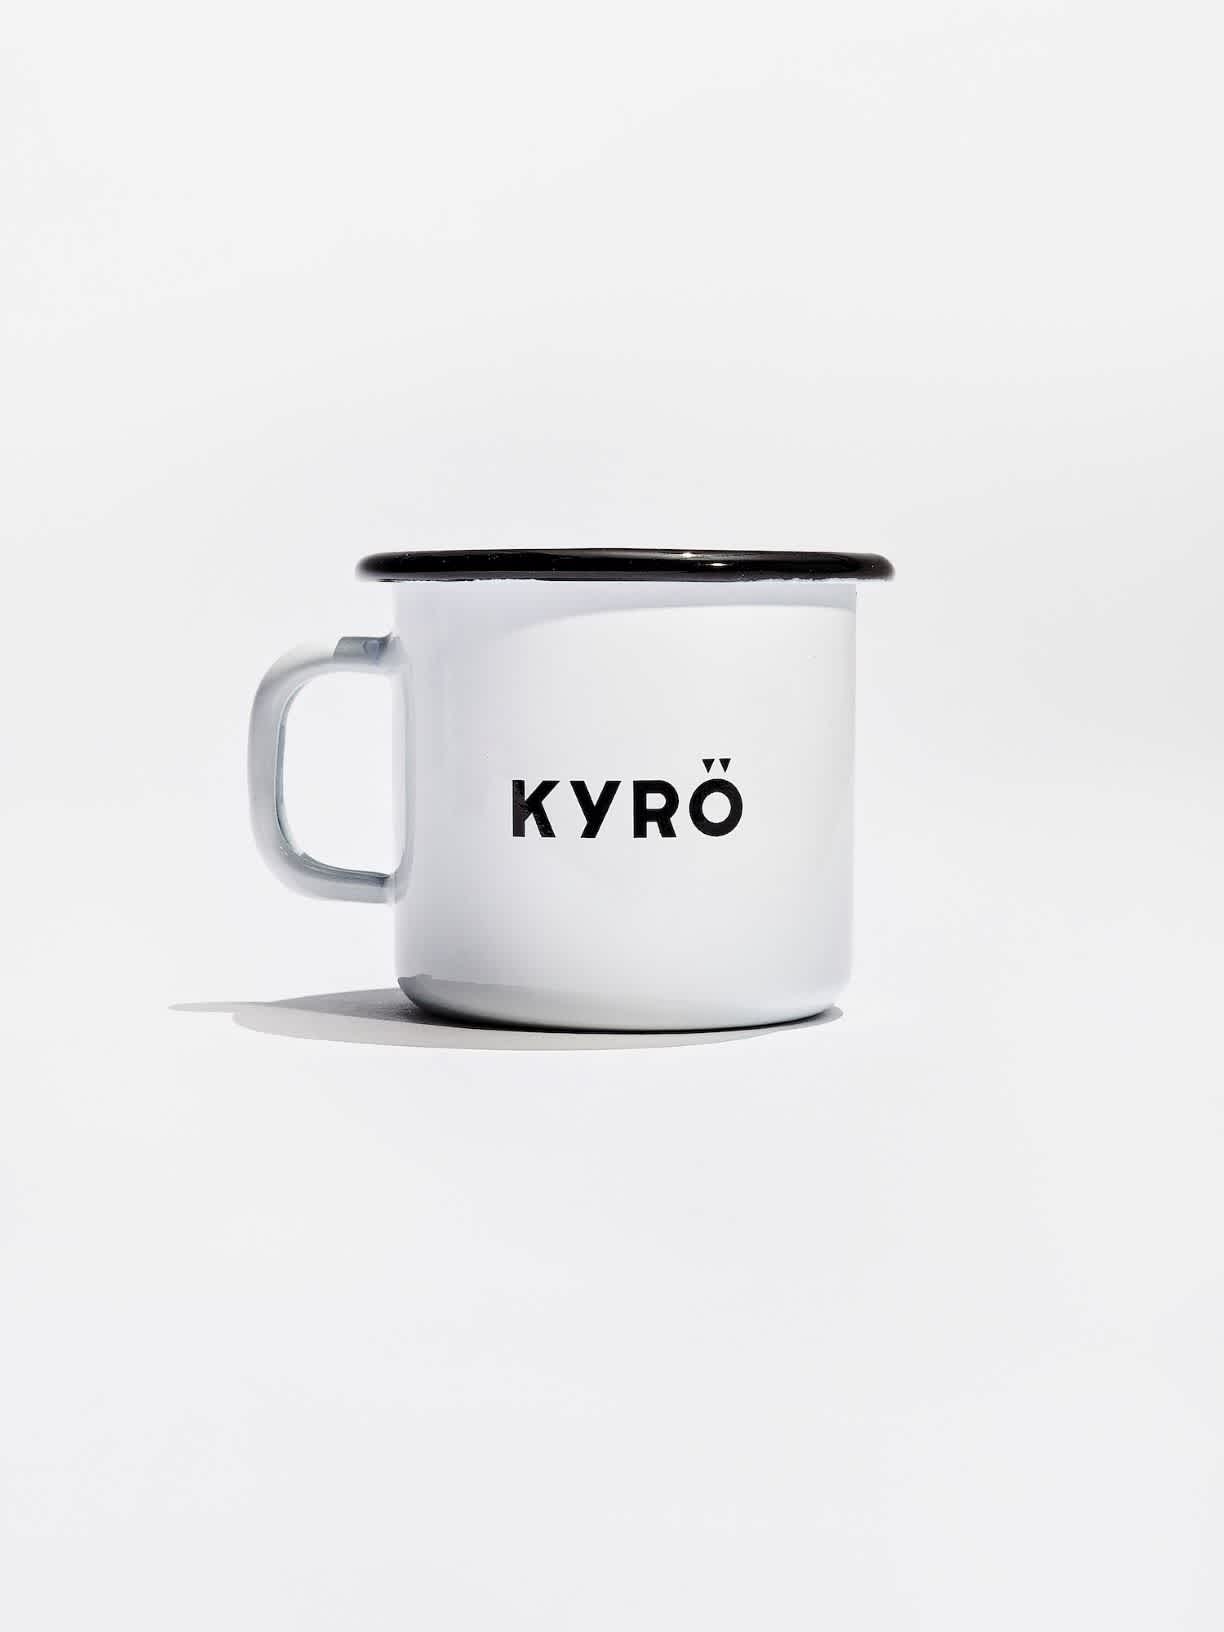 Product photo: a white Muurla enamel mug decorated with a black lip, rye illustration, and Kyrö logo. 